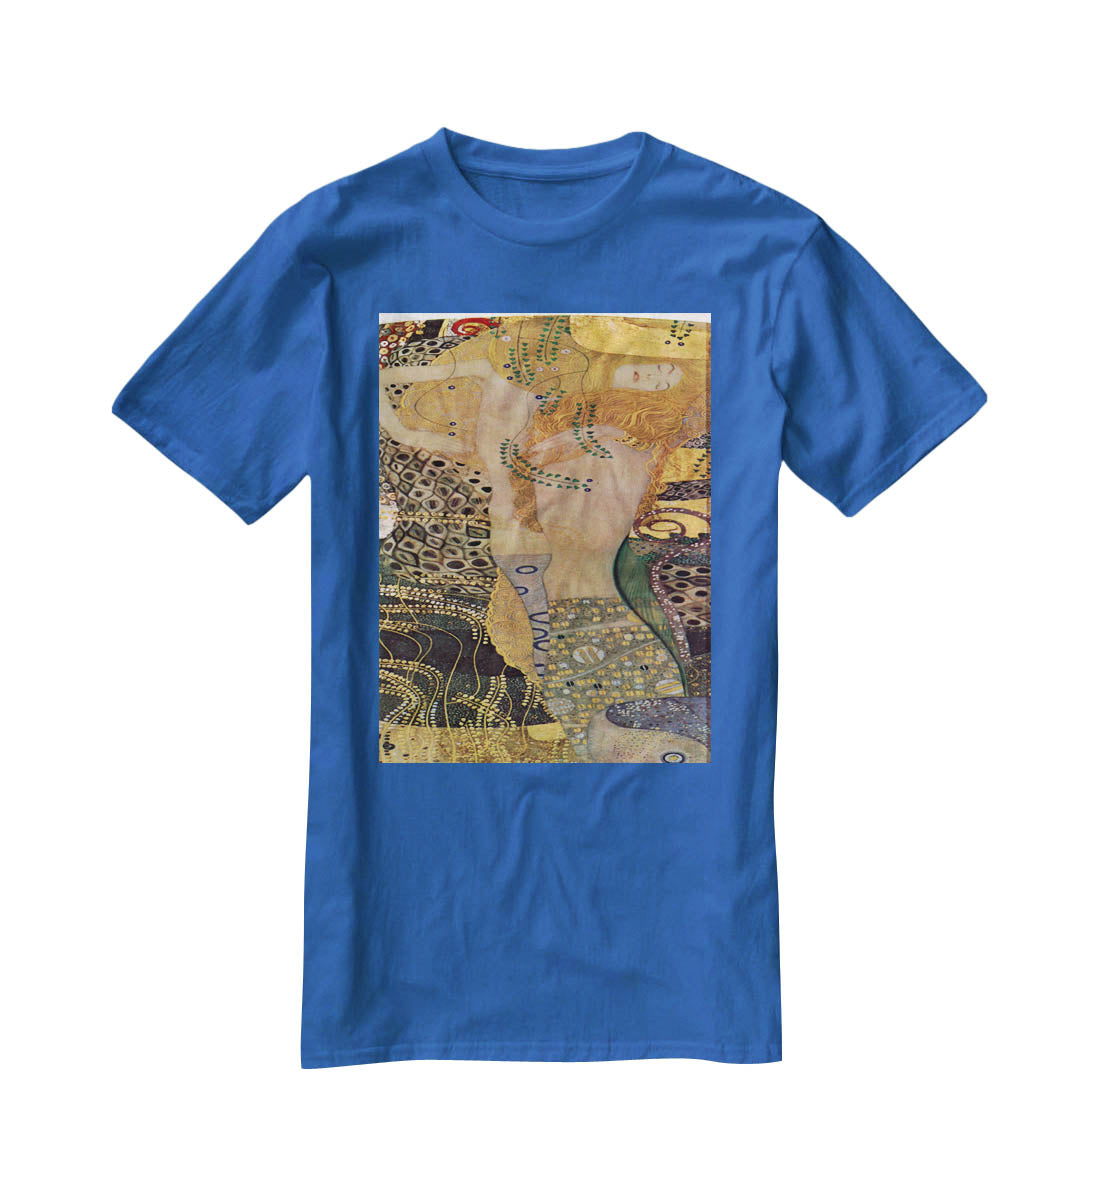 Water snakes friends I by Klimt T-Shirt - Canvas Art Rocks - 2